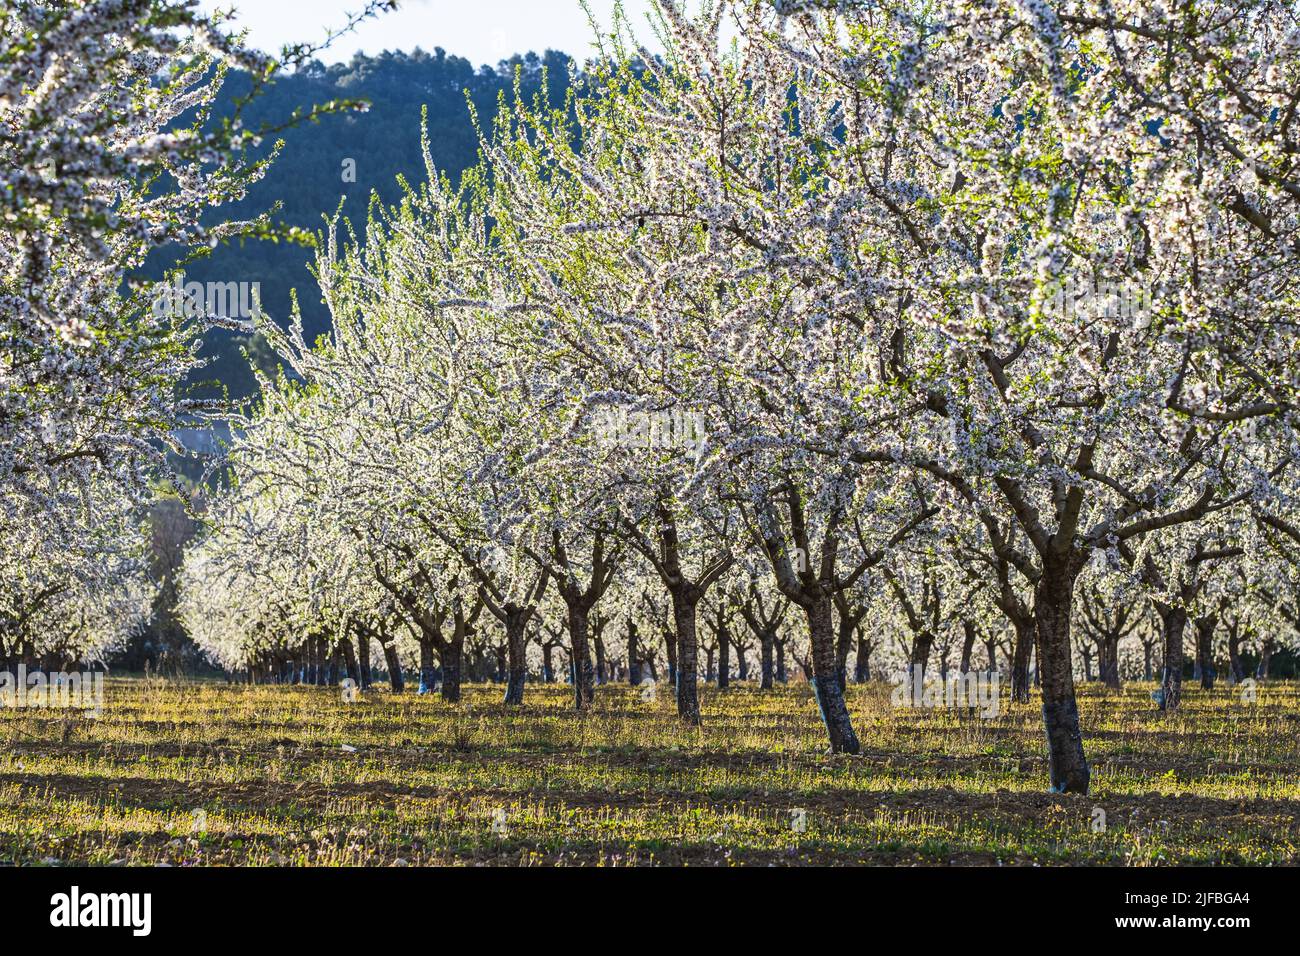 France, Vaucluse, Luberon regional nature park, Villars, cultivation of almond trees Stock Photo